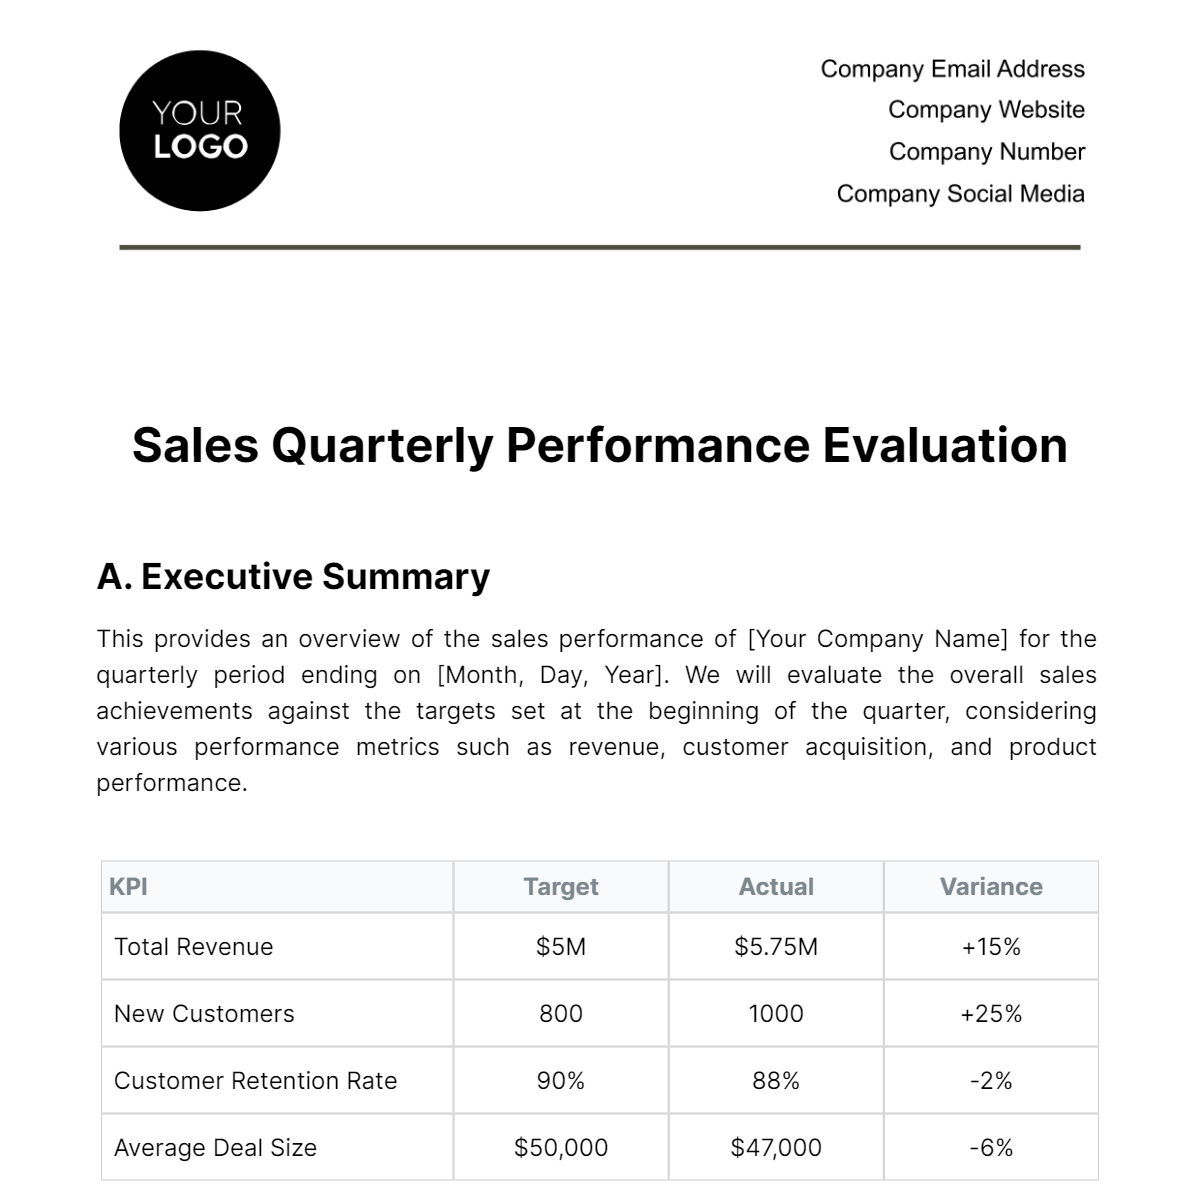 Sales Quarterly Performance Evaluation Template